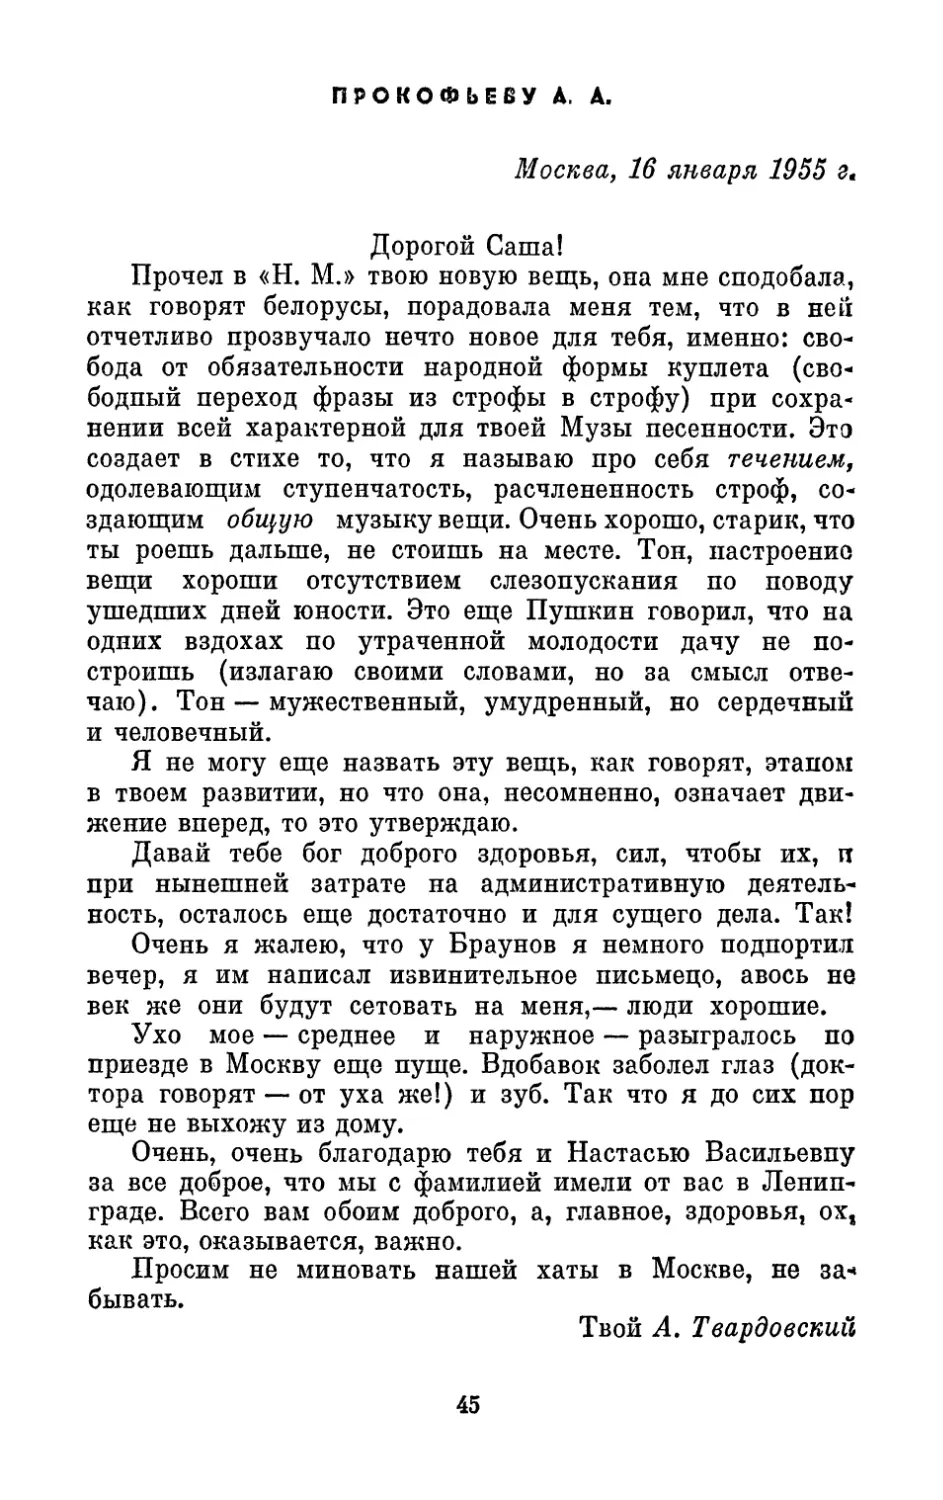 Прокофьеву А. А., 16 января 1955 г.